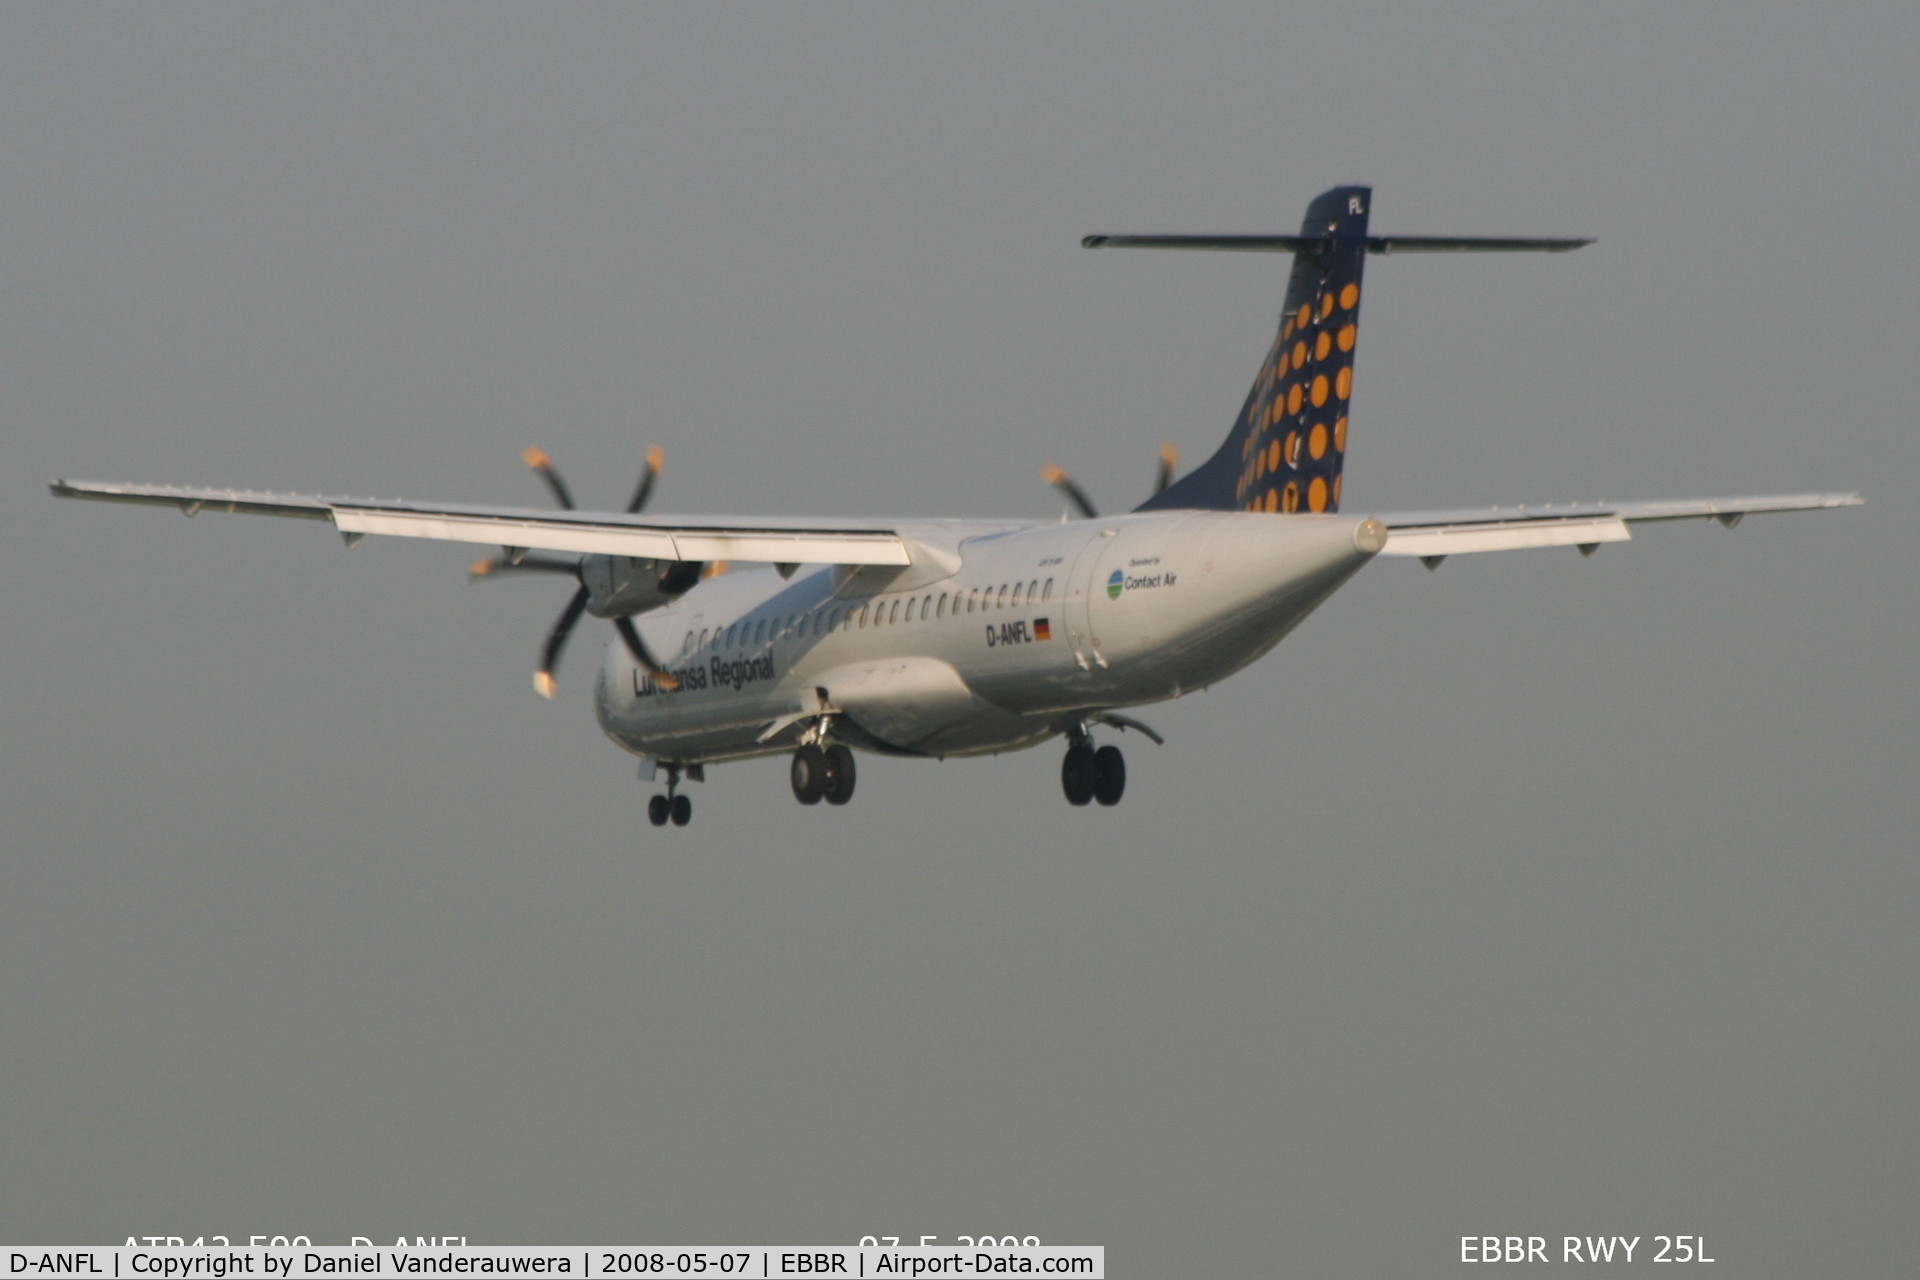 D-ANFL, 2001 ATR 72-212A C/N 668, flight LH4650 is descending to rwy 25L